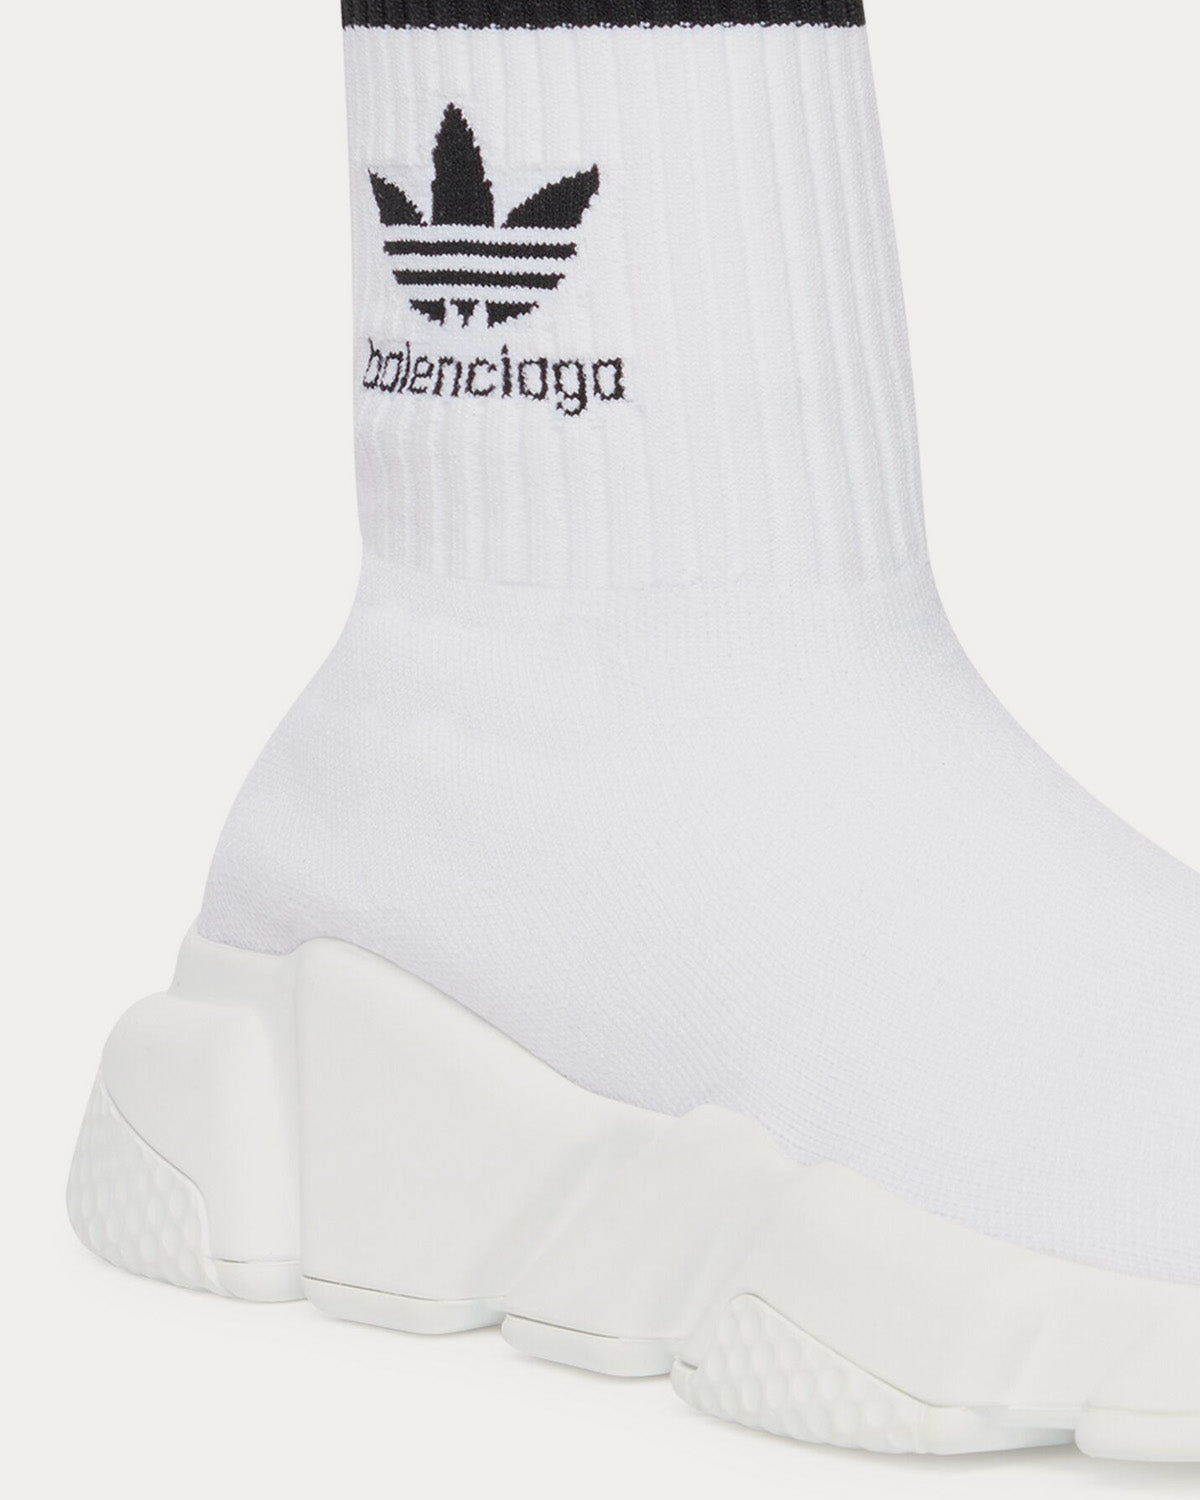 Balenciaga x Adidas - Speed Knit White High Top Sneakers